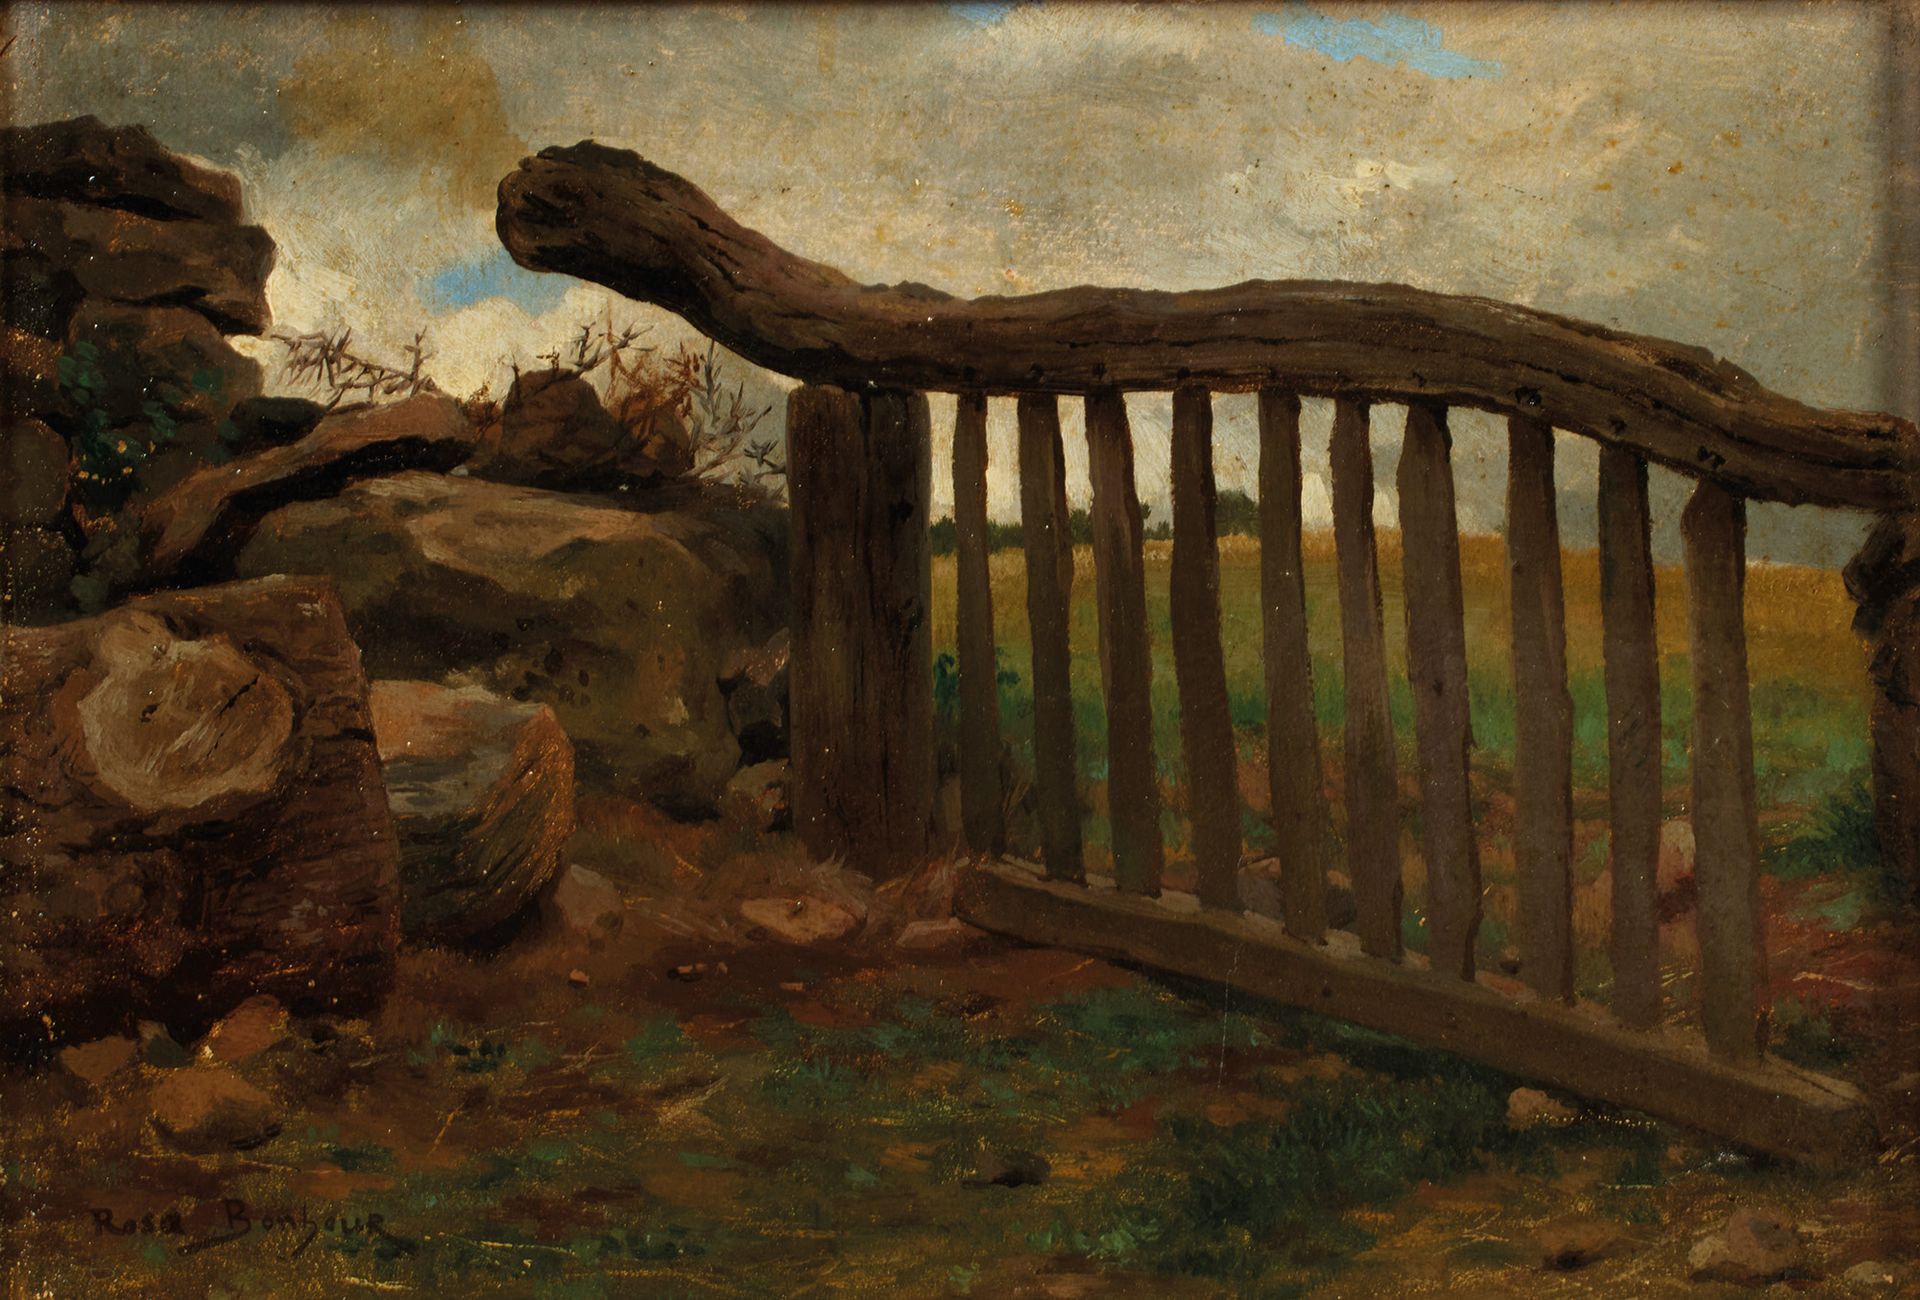 Rosa BONHEUR (1822-1899) Rosa BONHEUR (1822-1899)
The wooden fence
Oil on canvas&hellip;